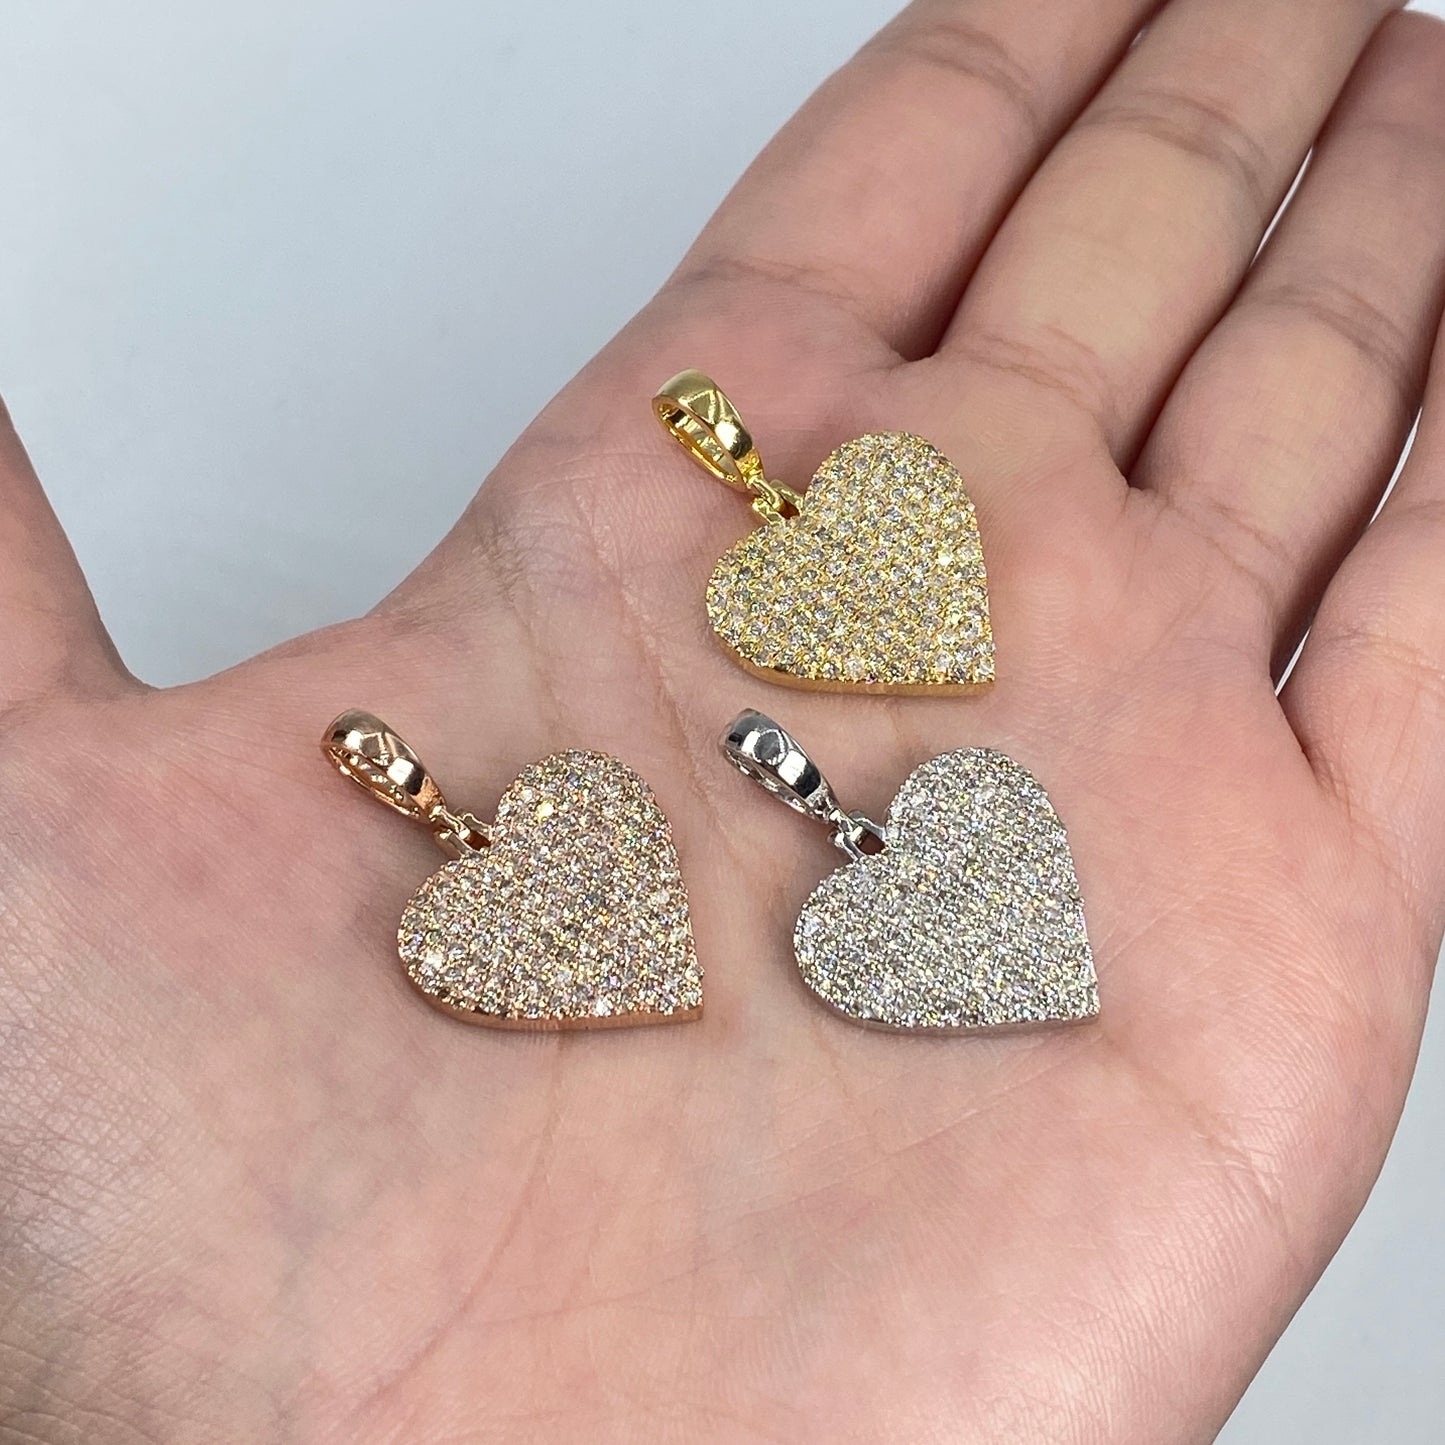 14K Icy Heart Diamond Pendant